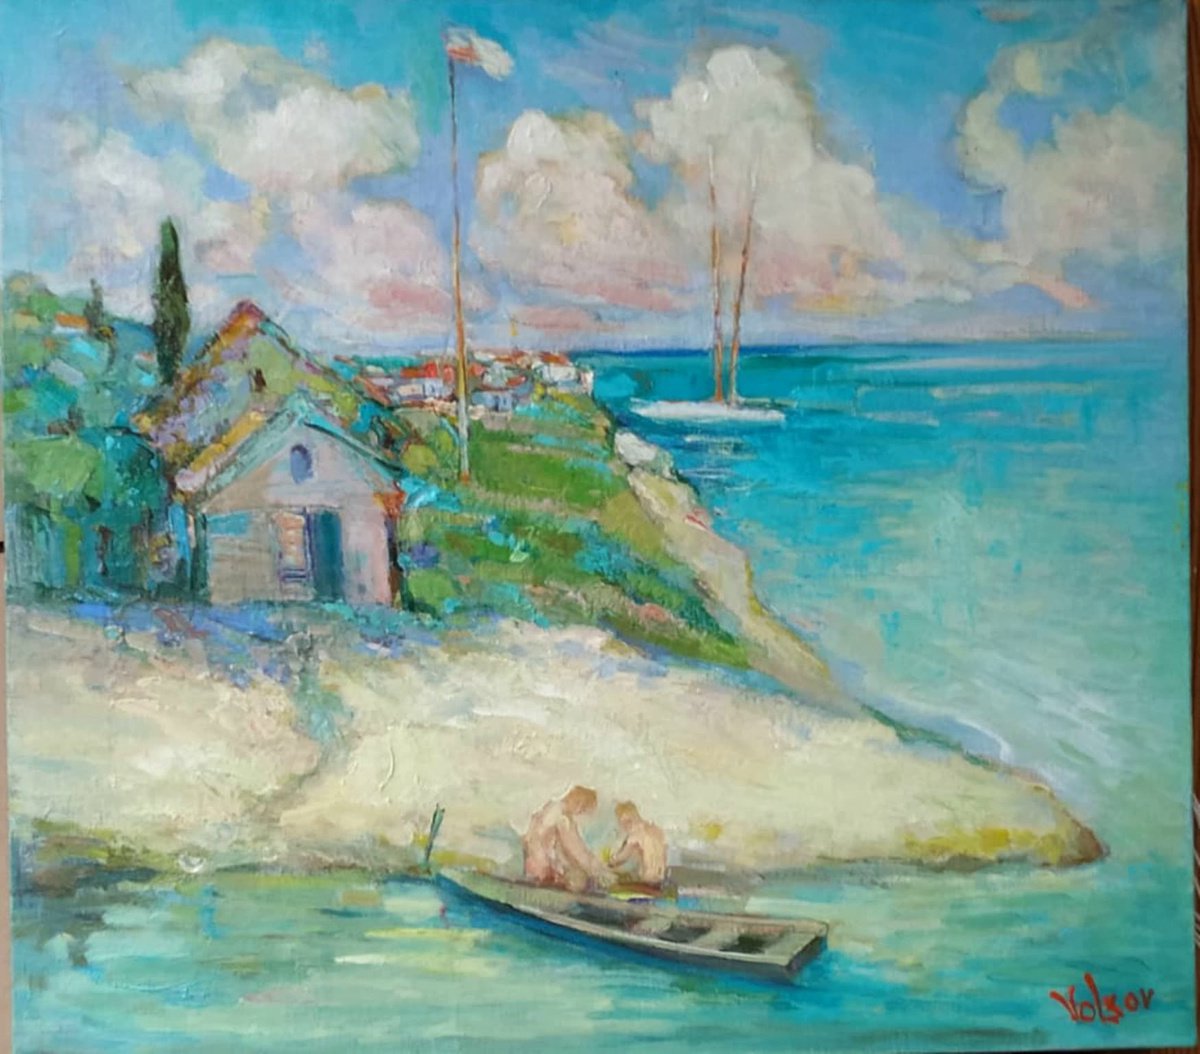 By the old boat by VIKTOR VOLKOV